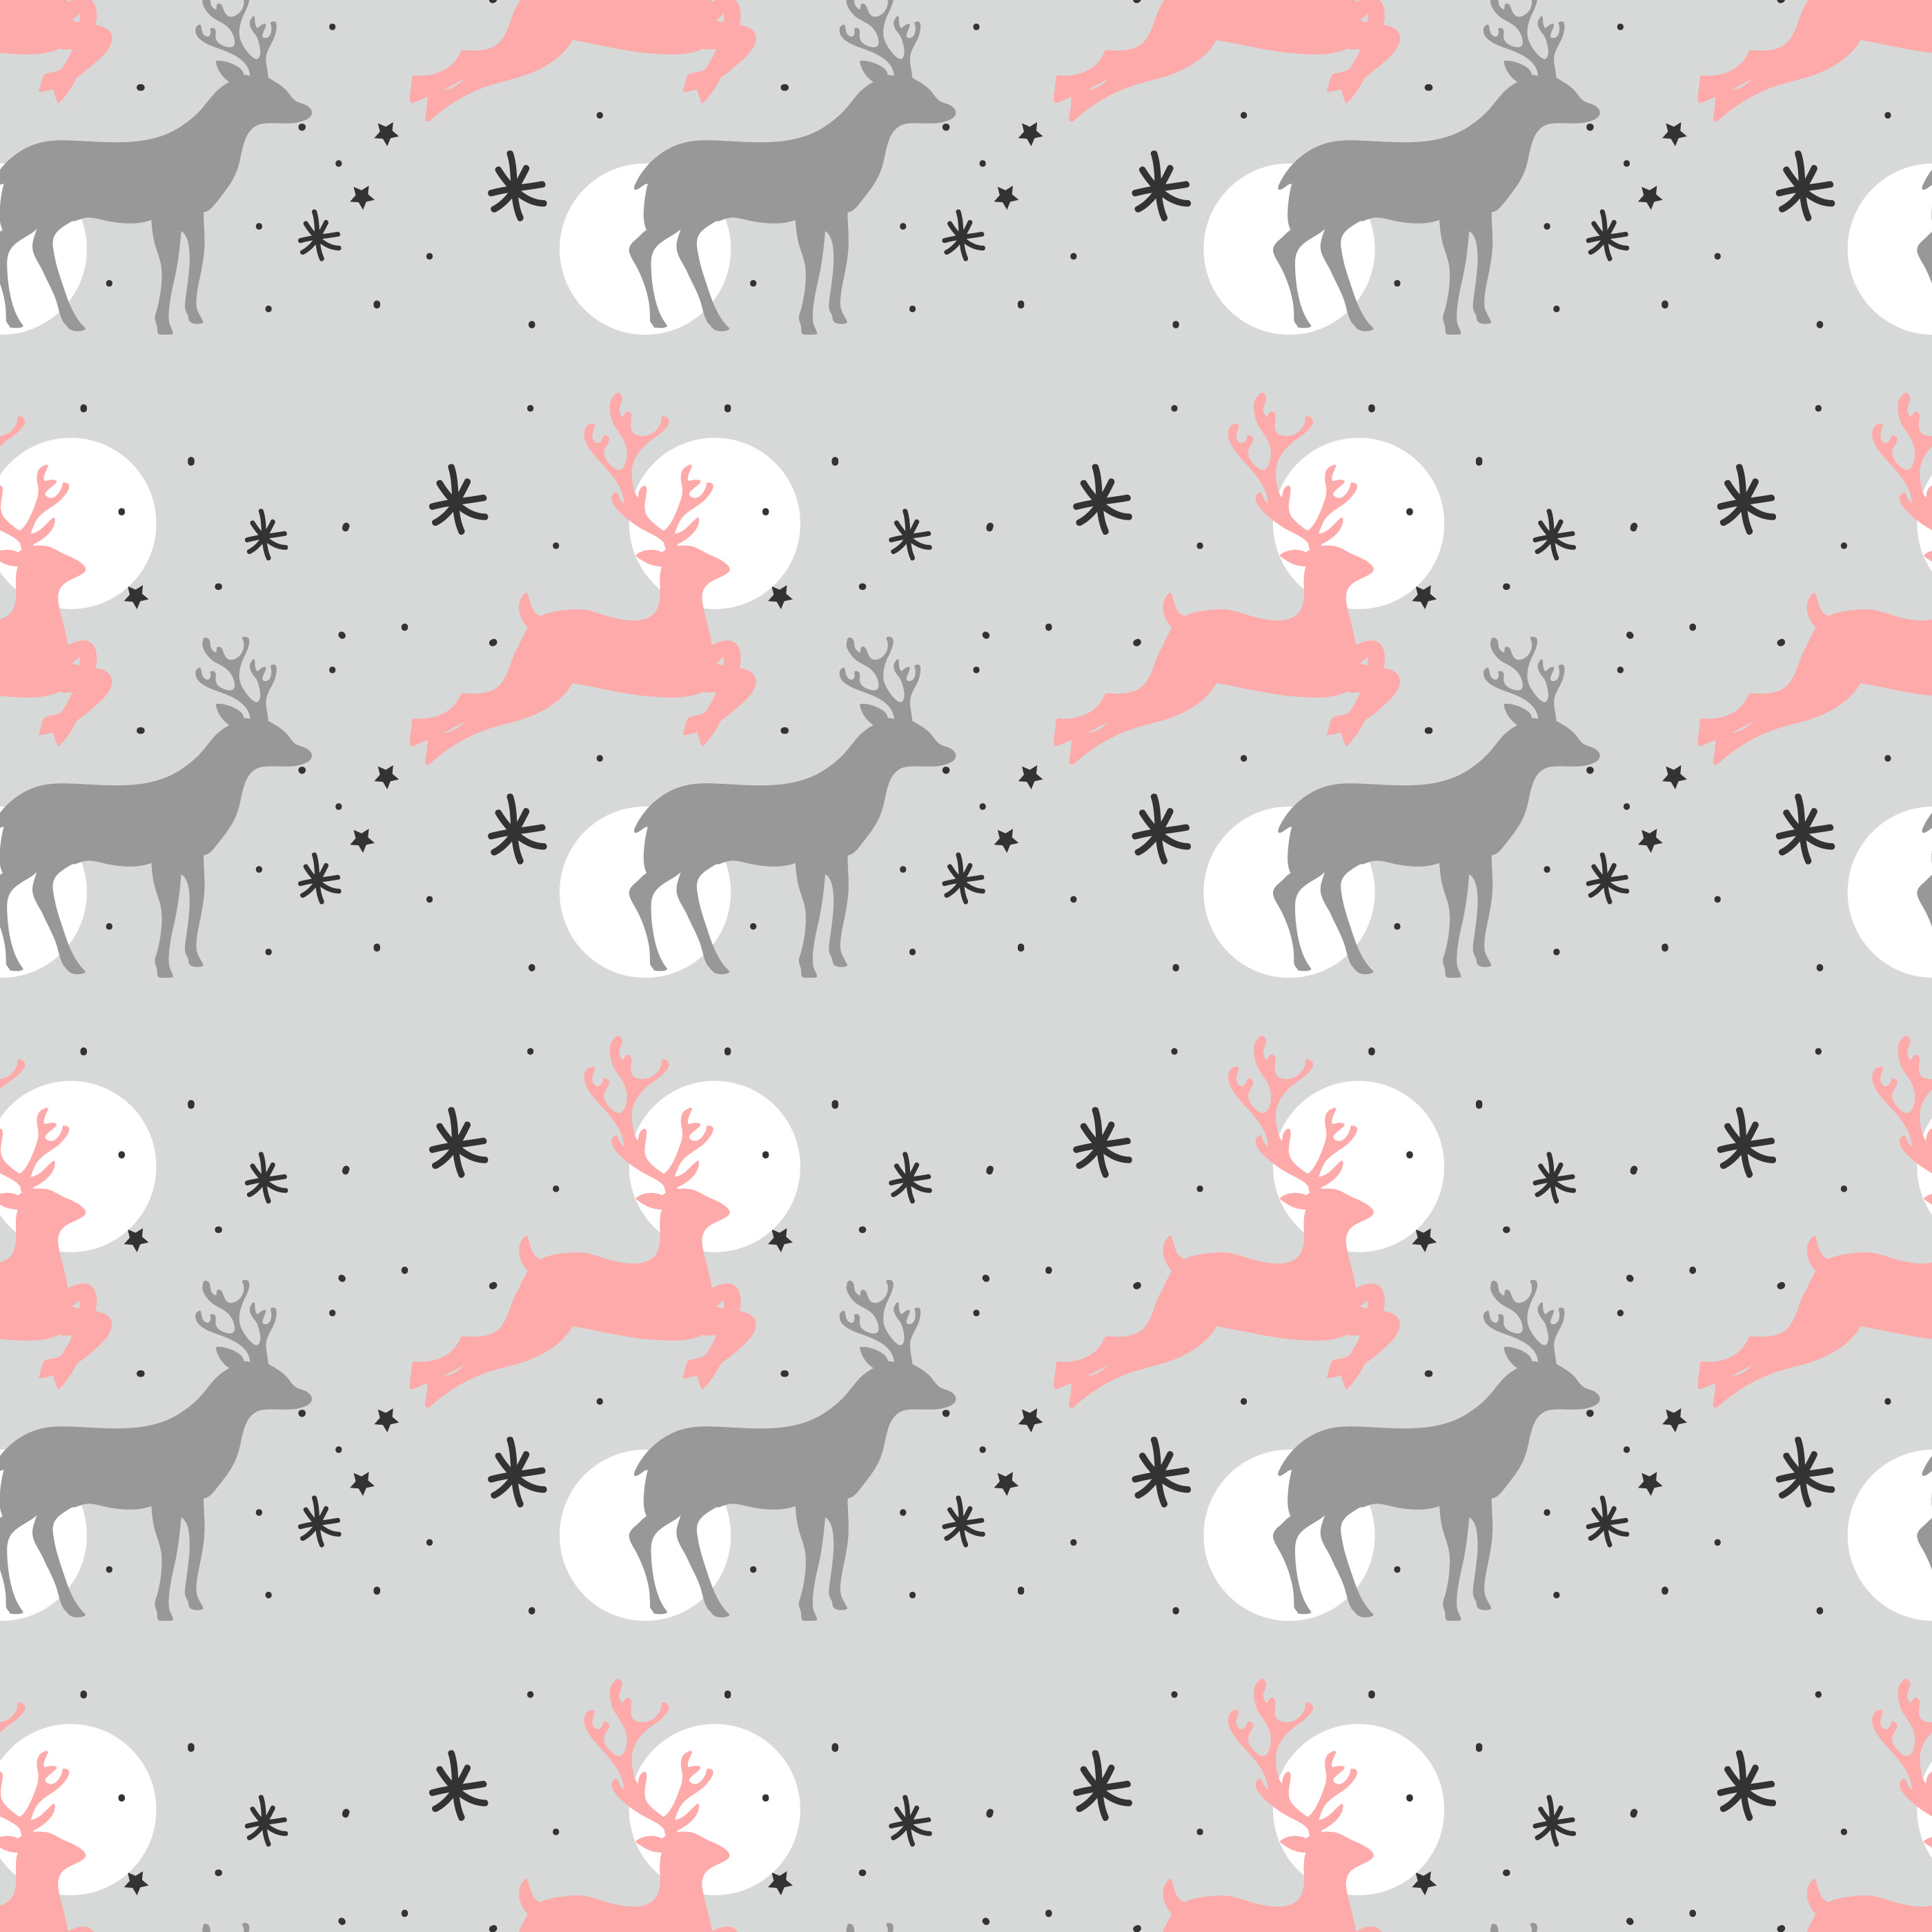 Download Christmas Deer Pattern - Download Free Vectors, Clipart ...